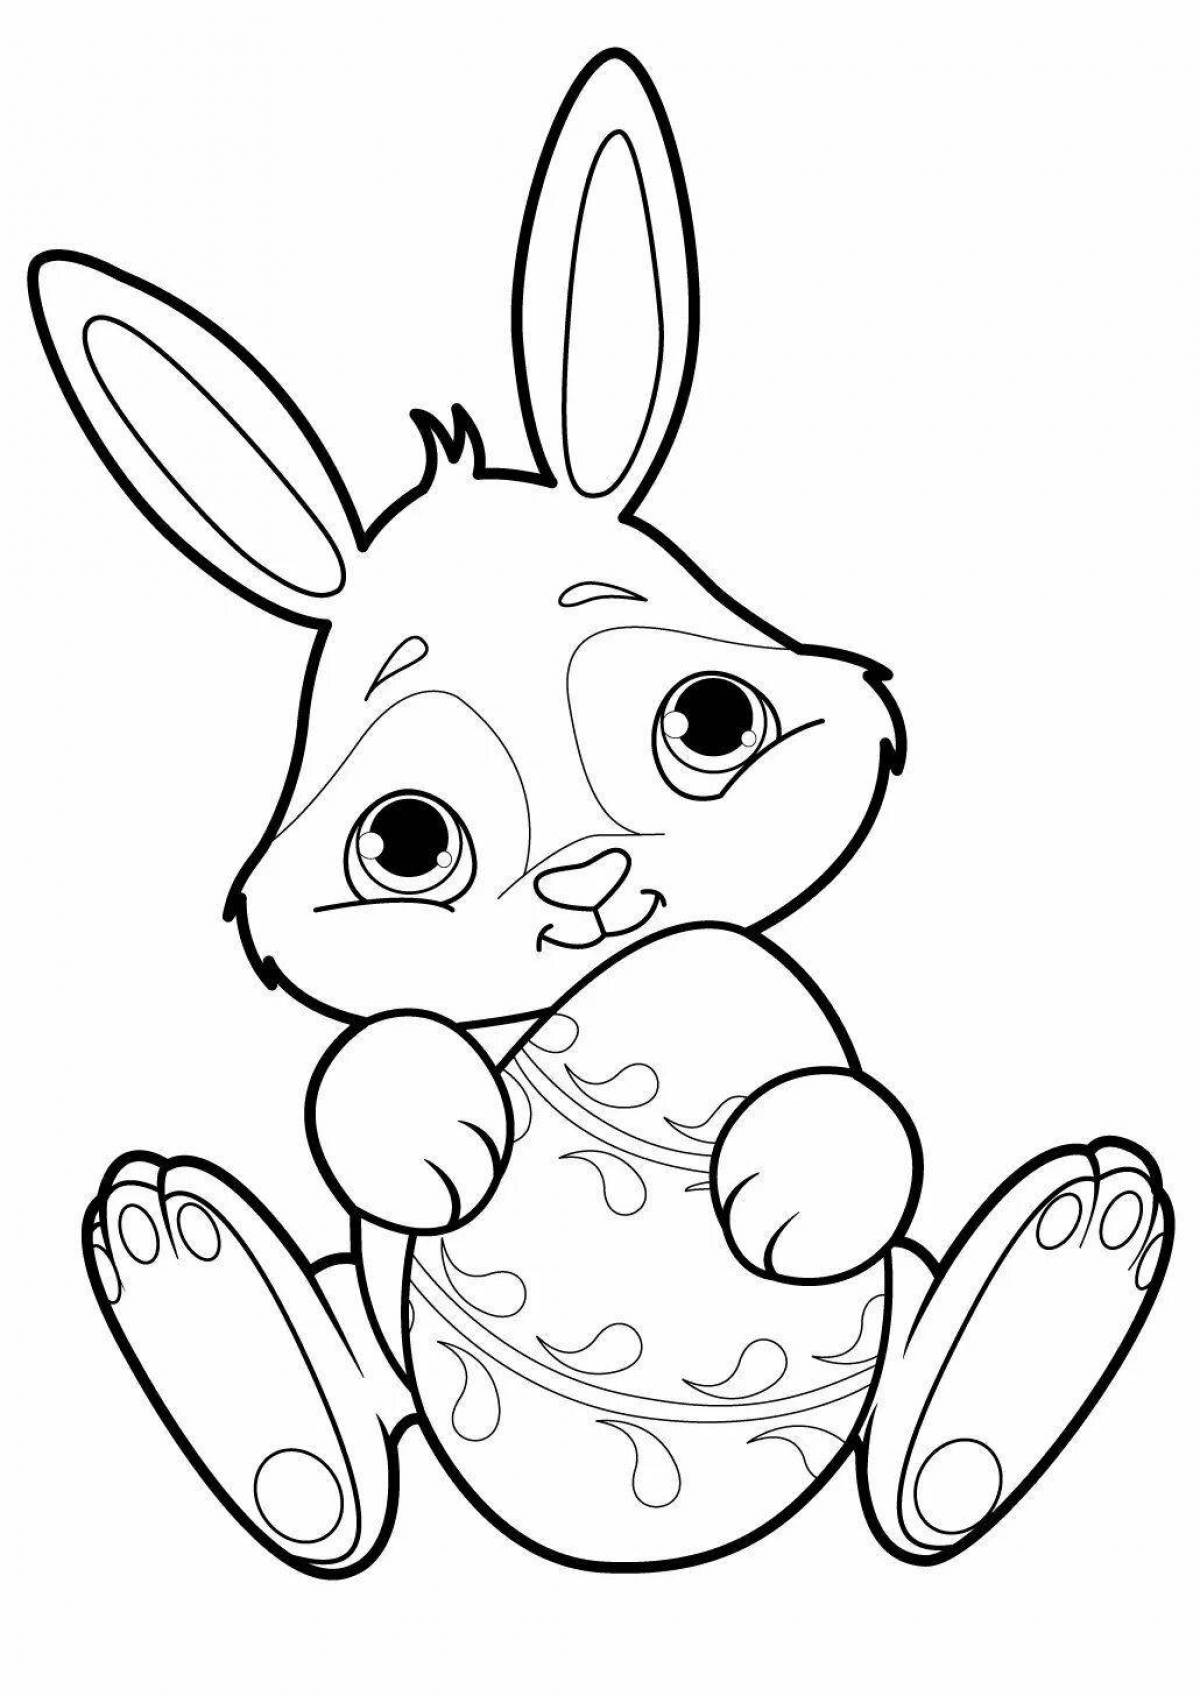 Furry bunny coloring book